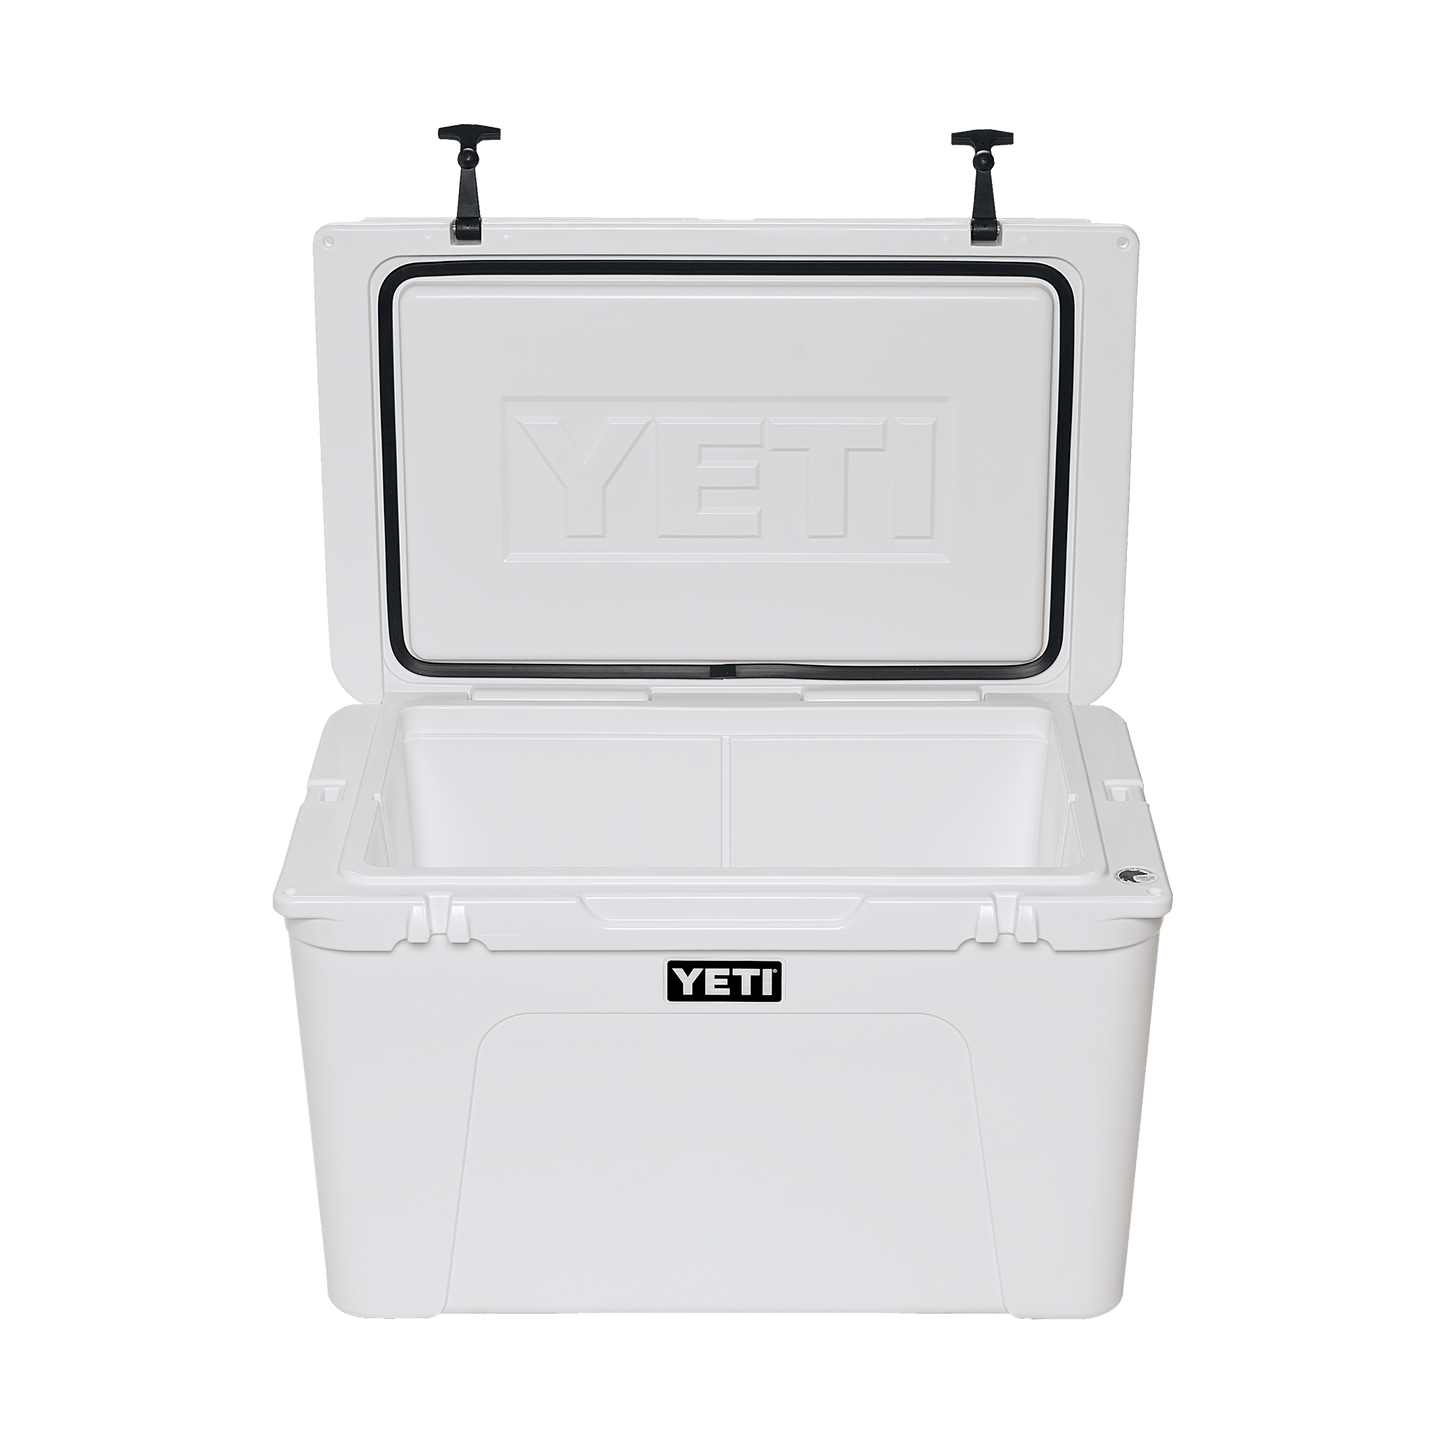 YETI Tundra® 105 Cool Box White